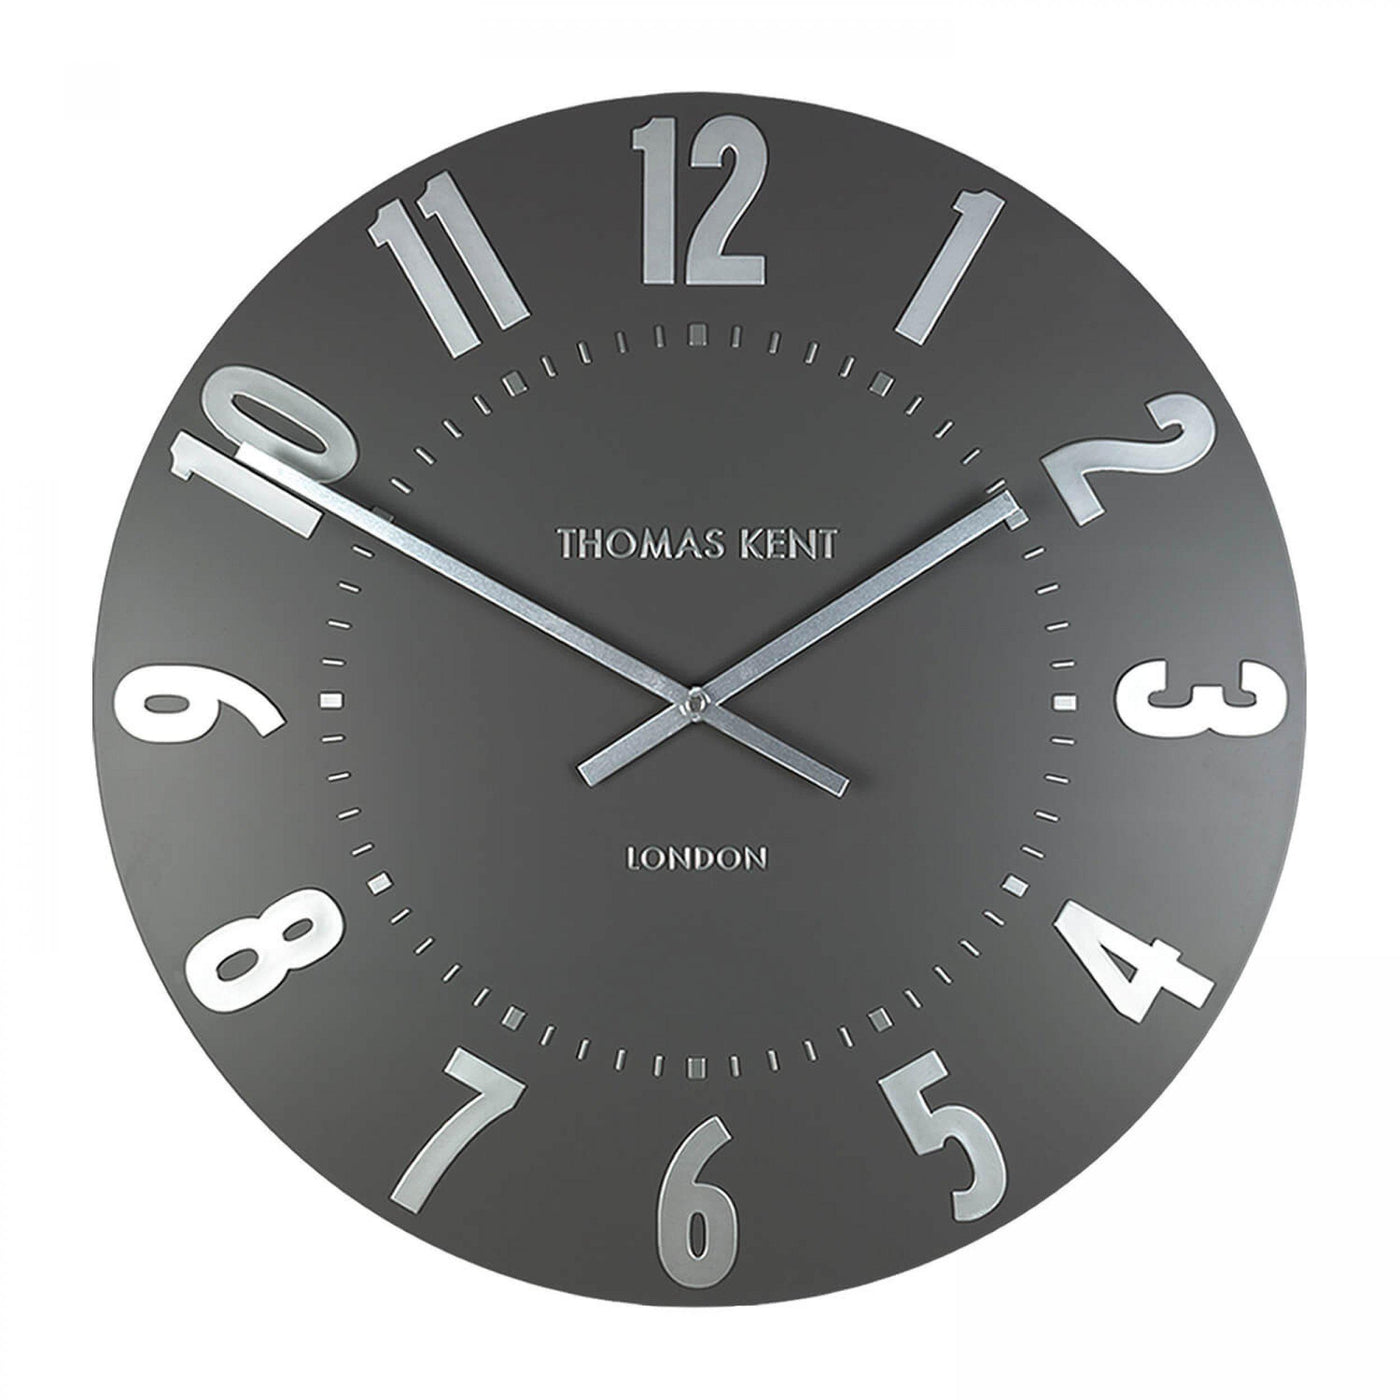 Thomas Kent London. Mulberry Wall Clock 12" (30 cm) Graphite Silver - timeframedclocks